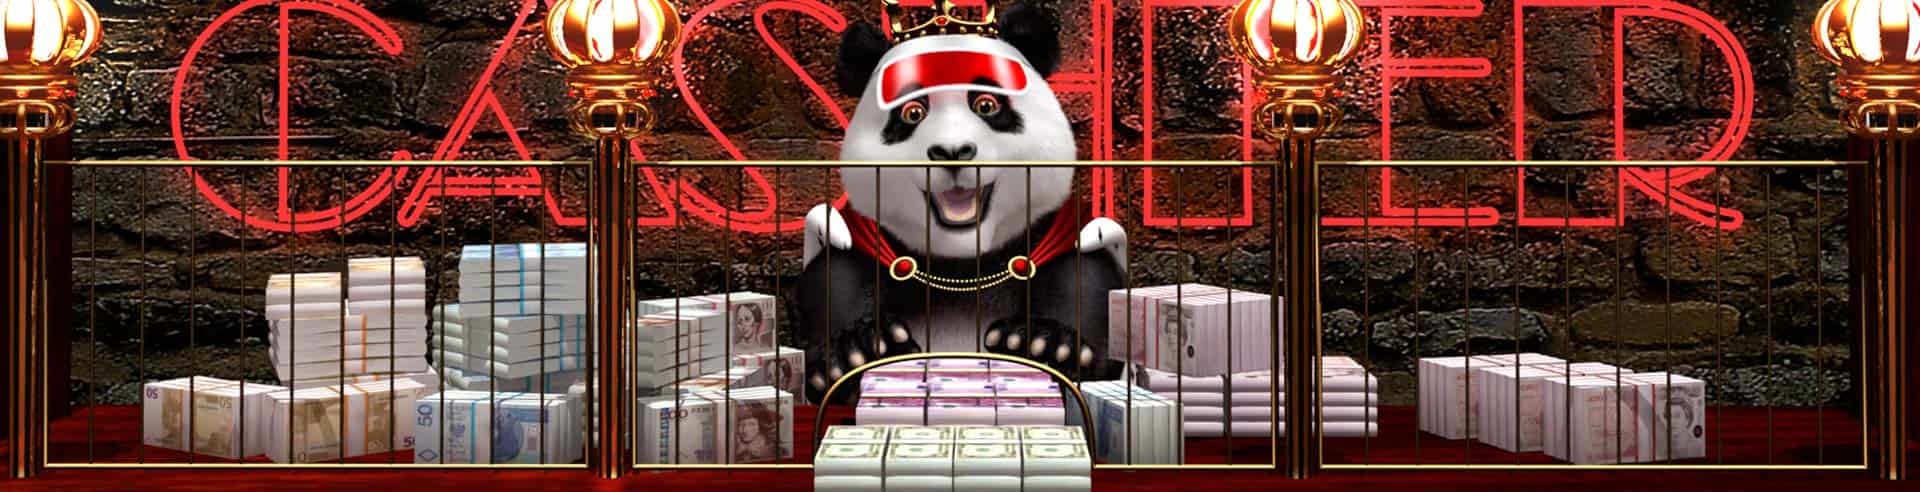 Royal Panda cashier